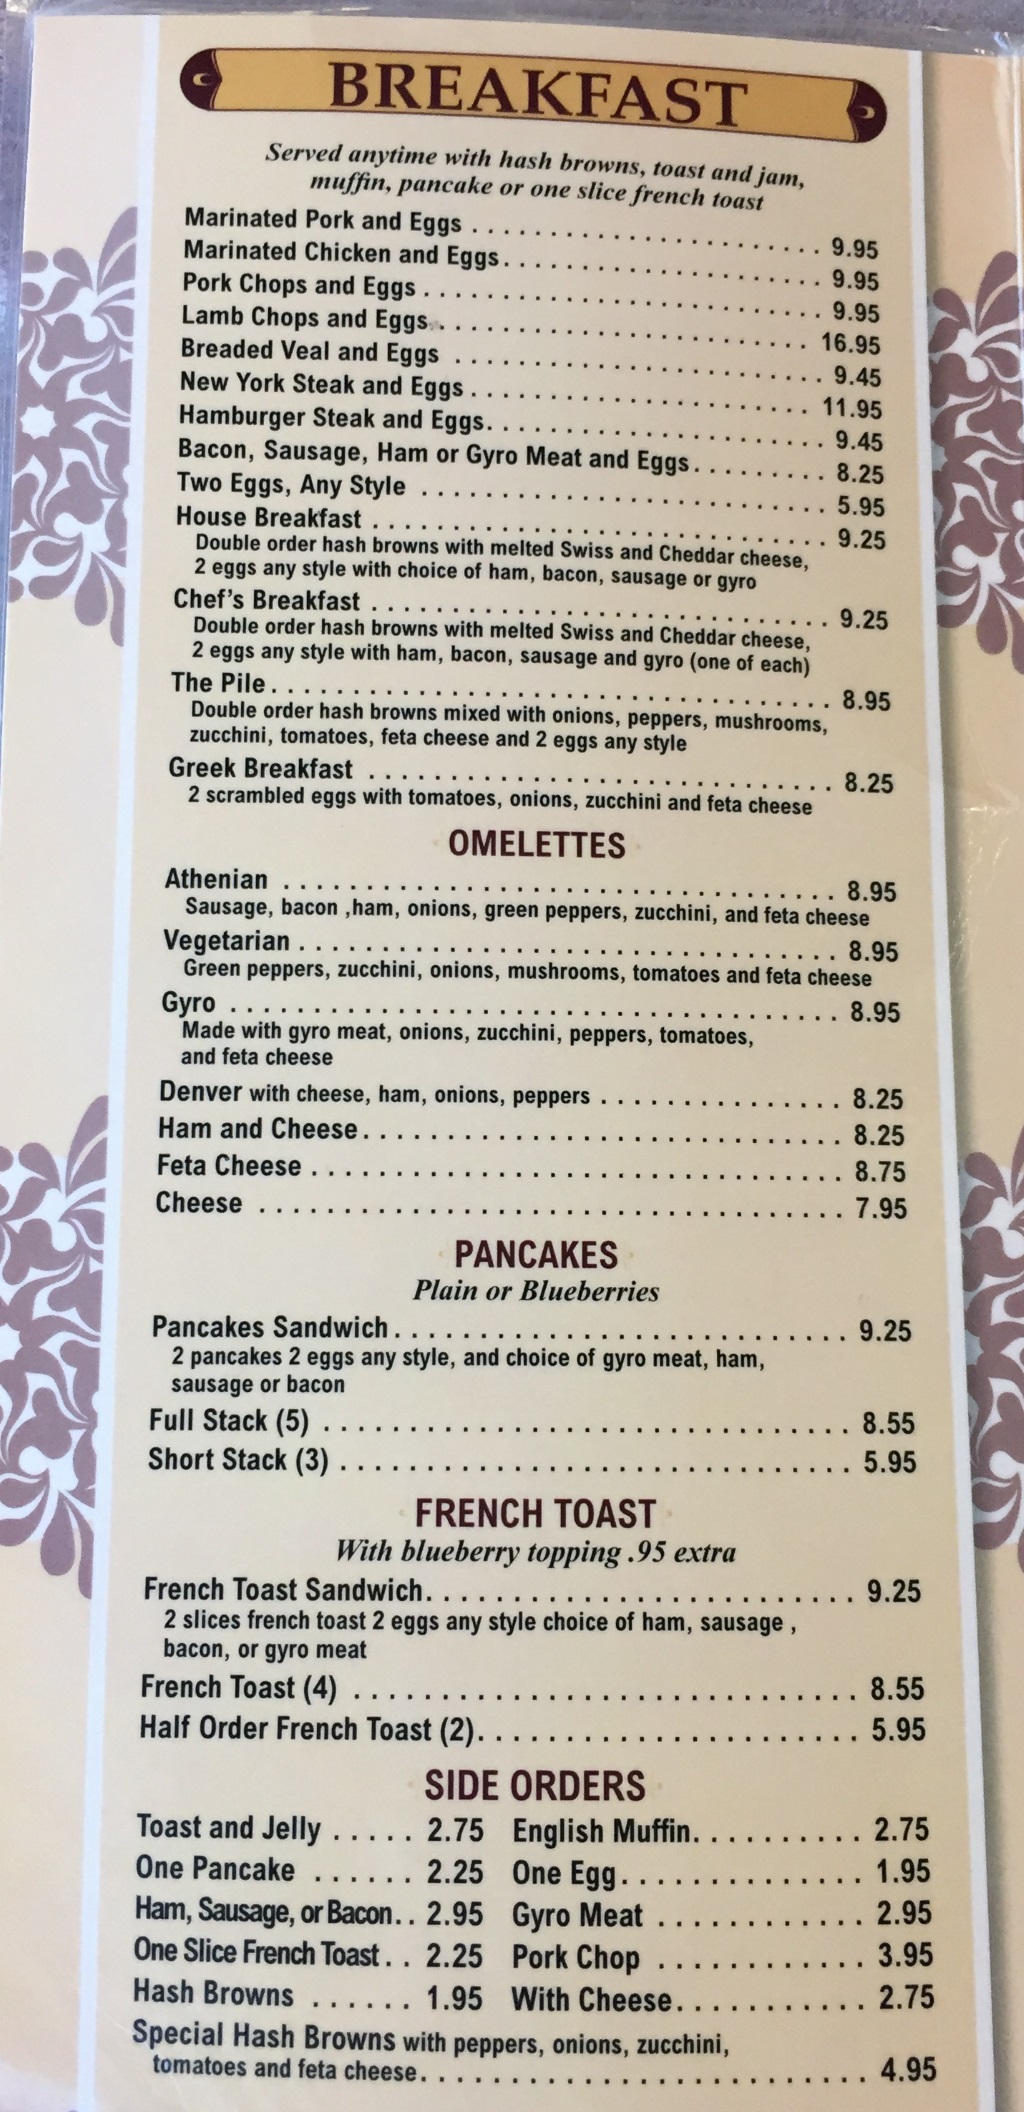 The Other Place restaurant menu – SLC menu